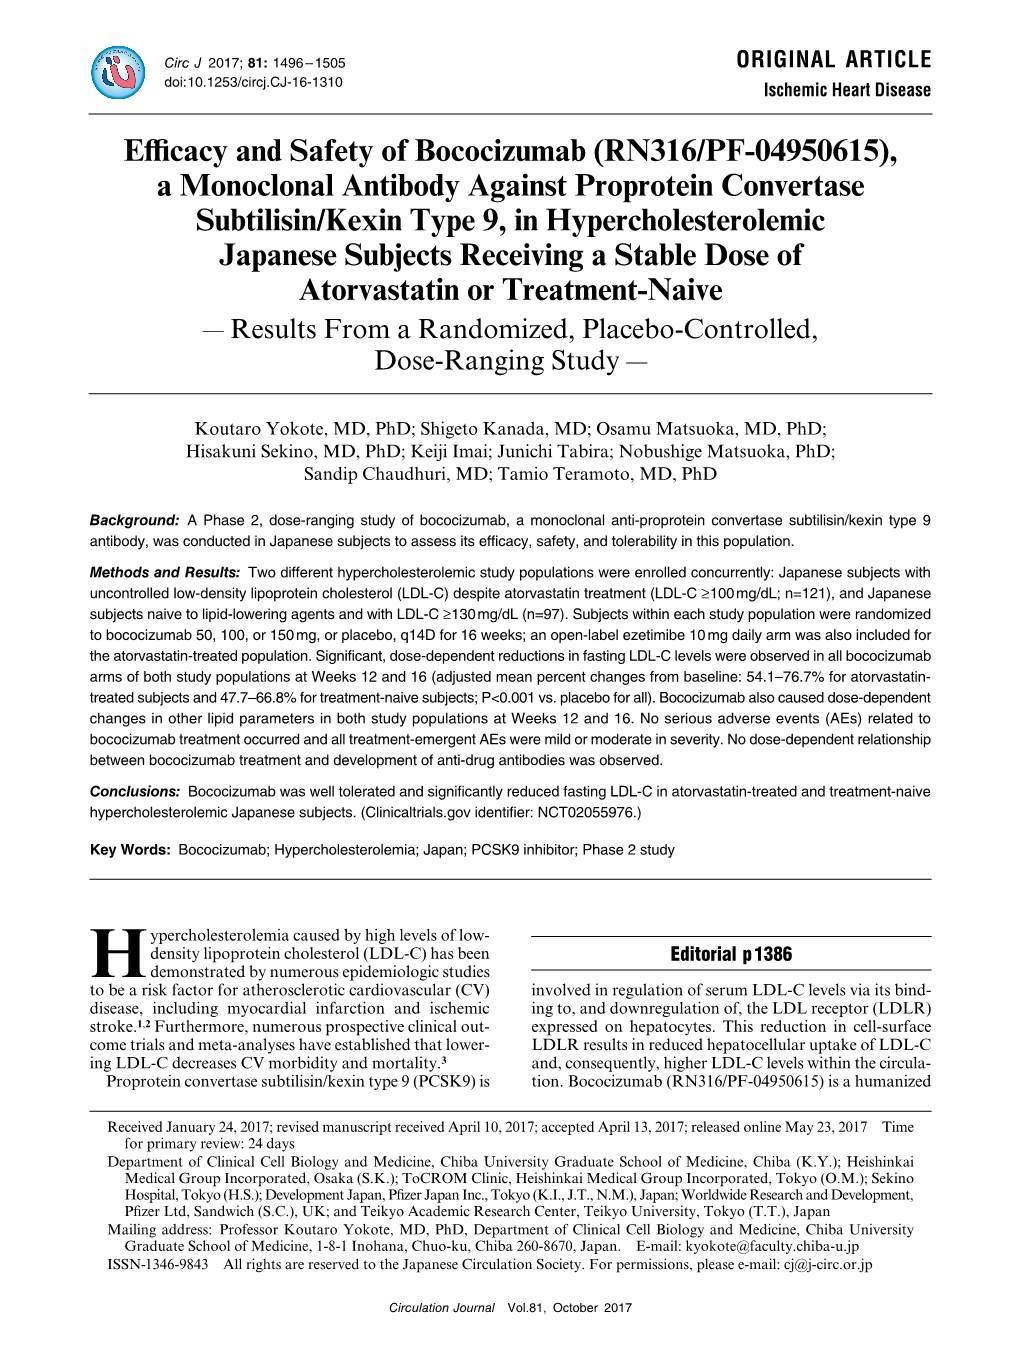 Efficacy and Safety of Bococizumab (RN316/PF-04950615)